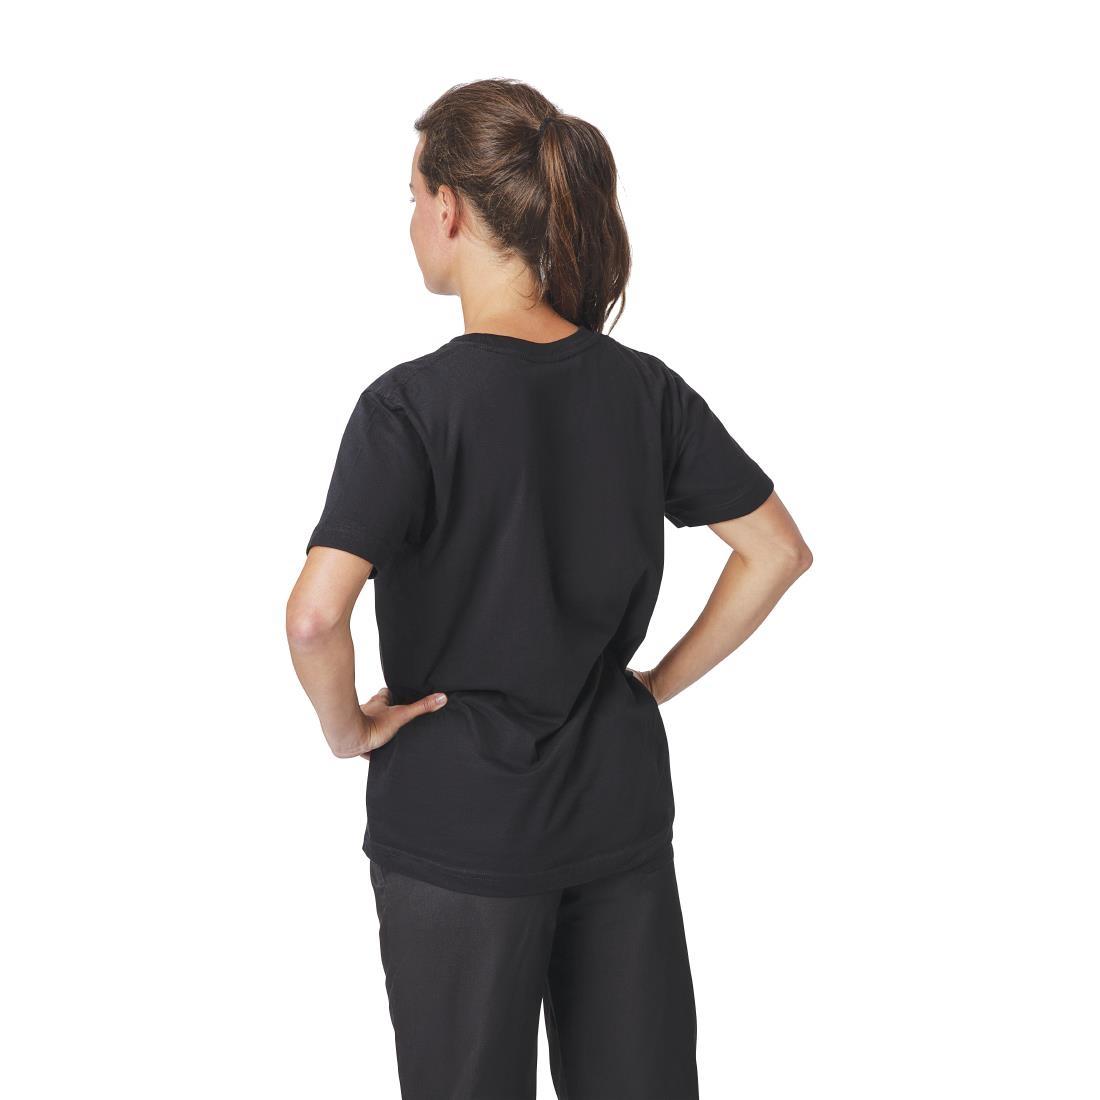 Unisex Chef T-Shirt Black XL - A295-XL  - 5